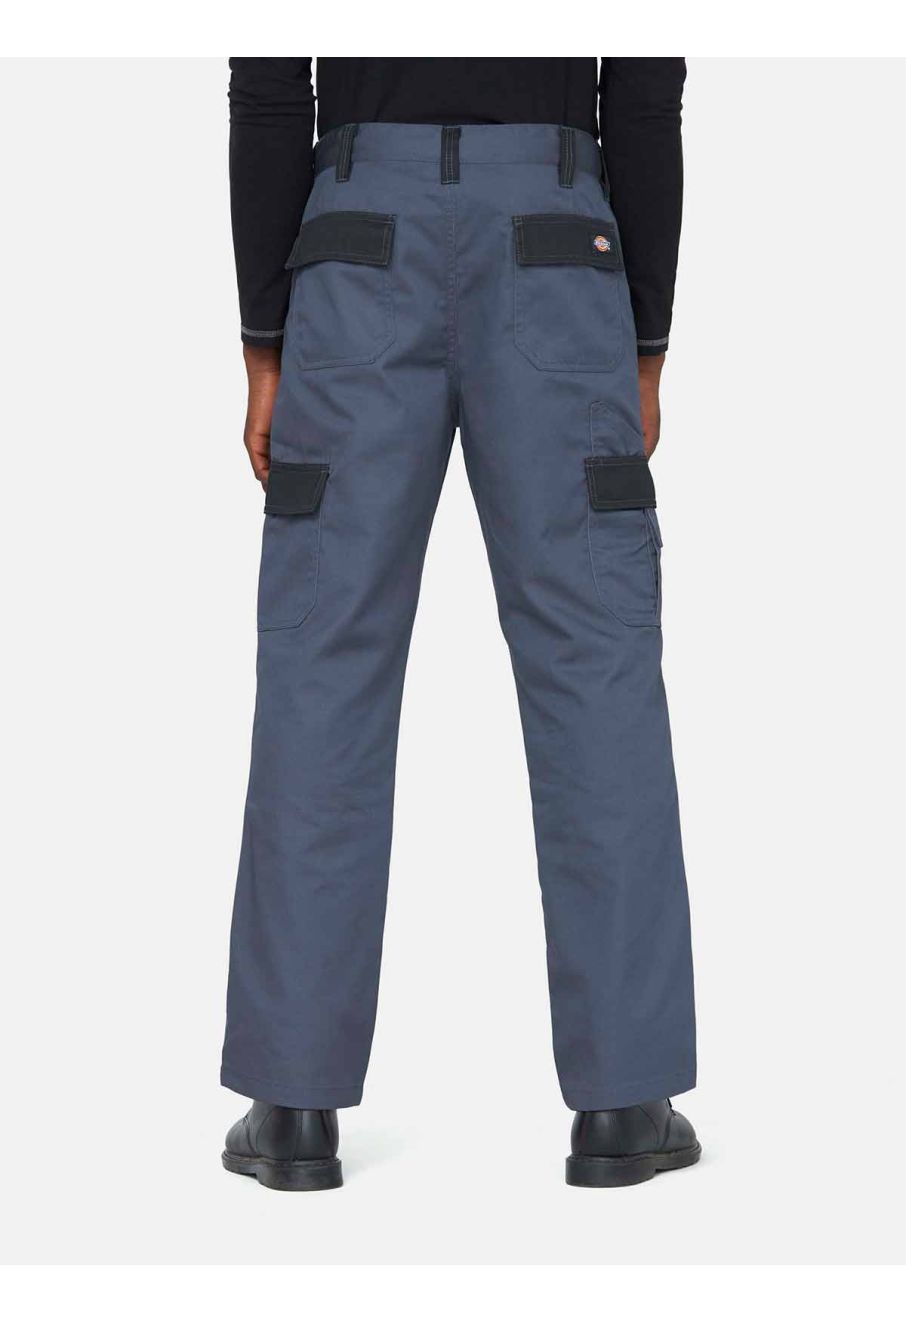 Men's Multi-Pocket Work Trouser Grey / Black | 2 Thigh Pockets